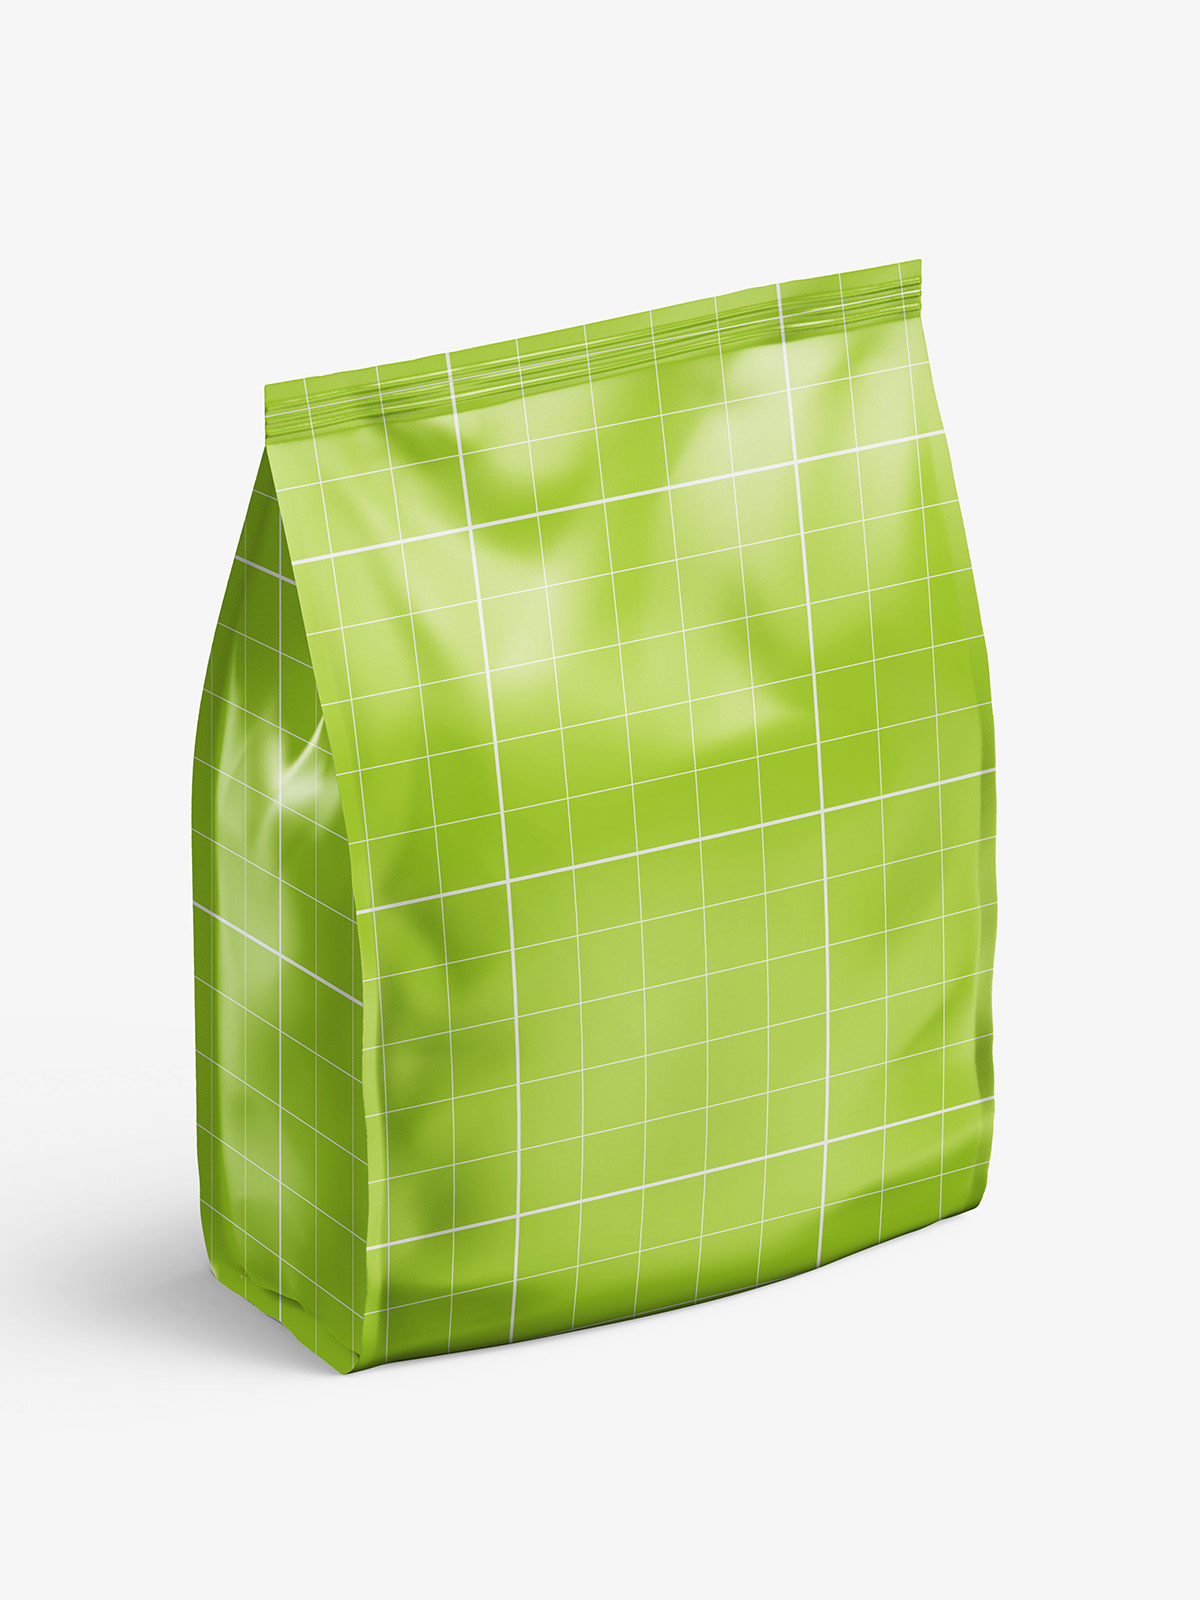 Download Matt Food Bag Mockup Smarty Mockups